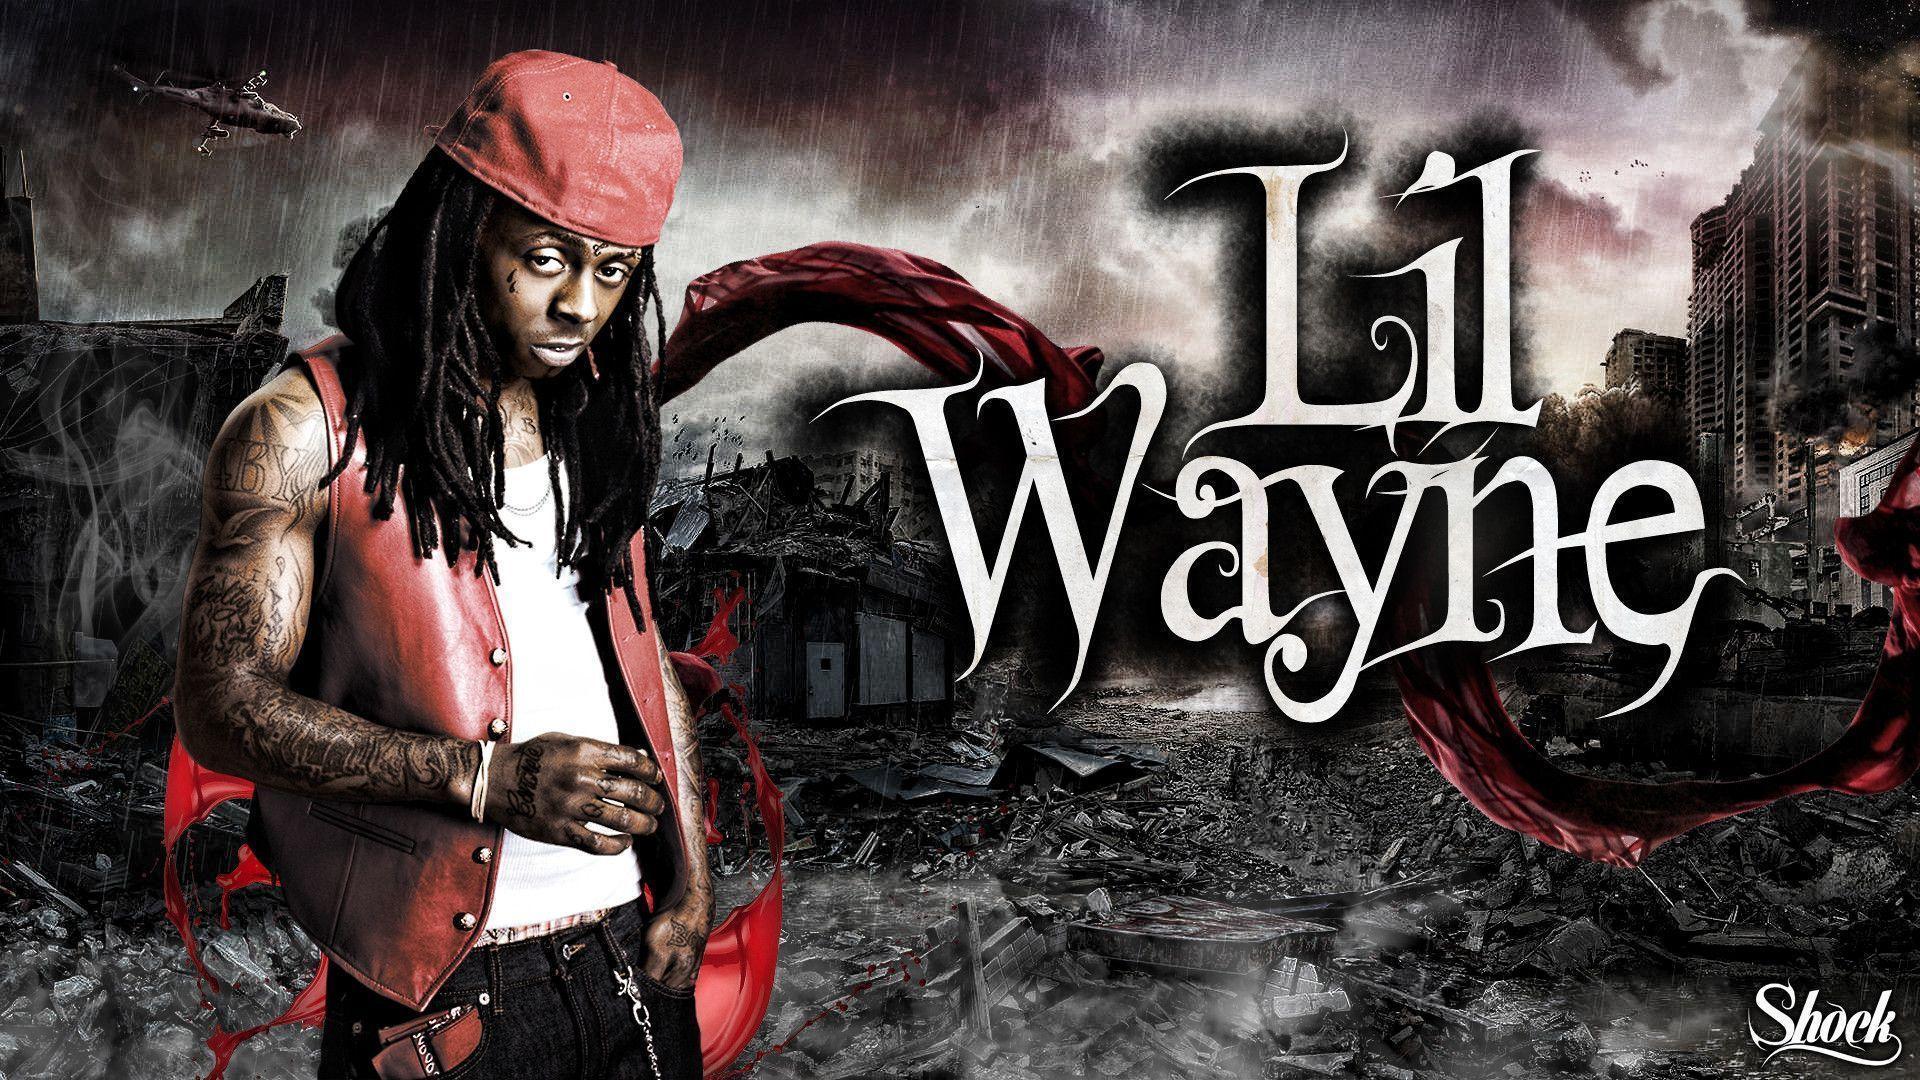 Lil Wayne Wallpaper For Facebook